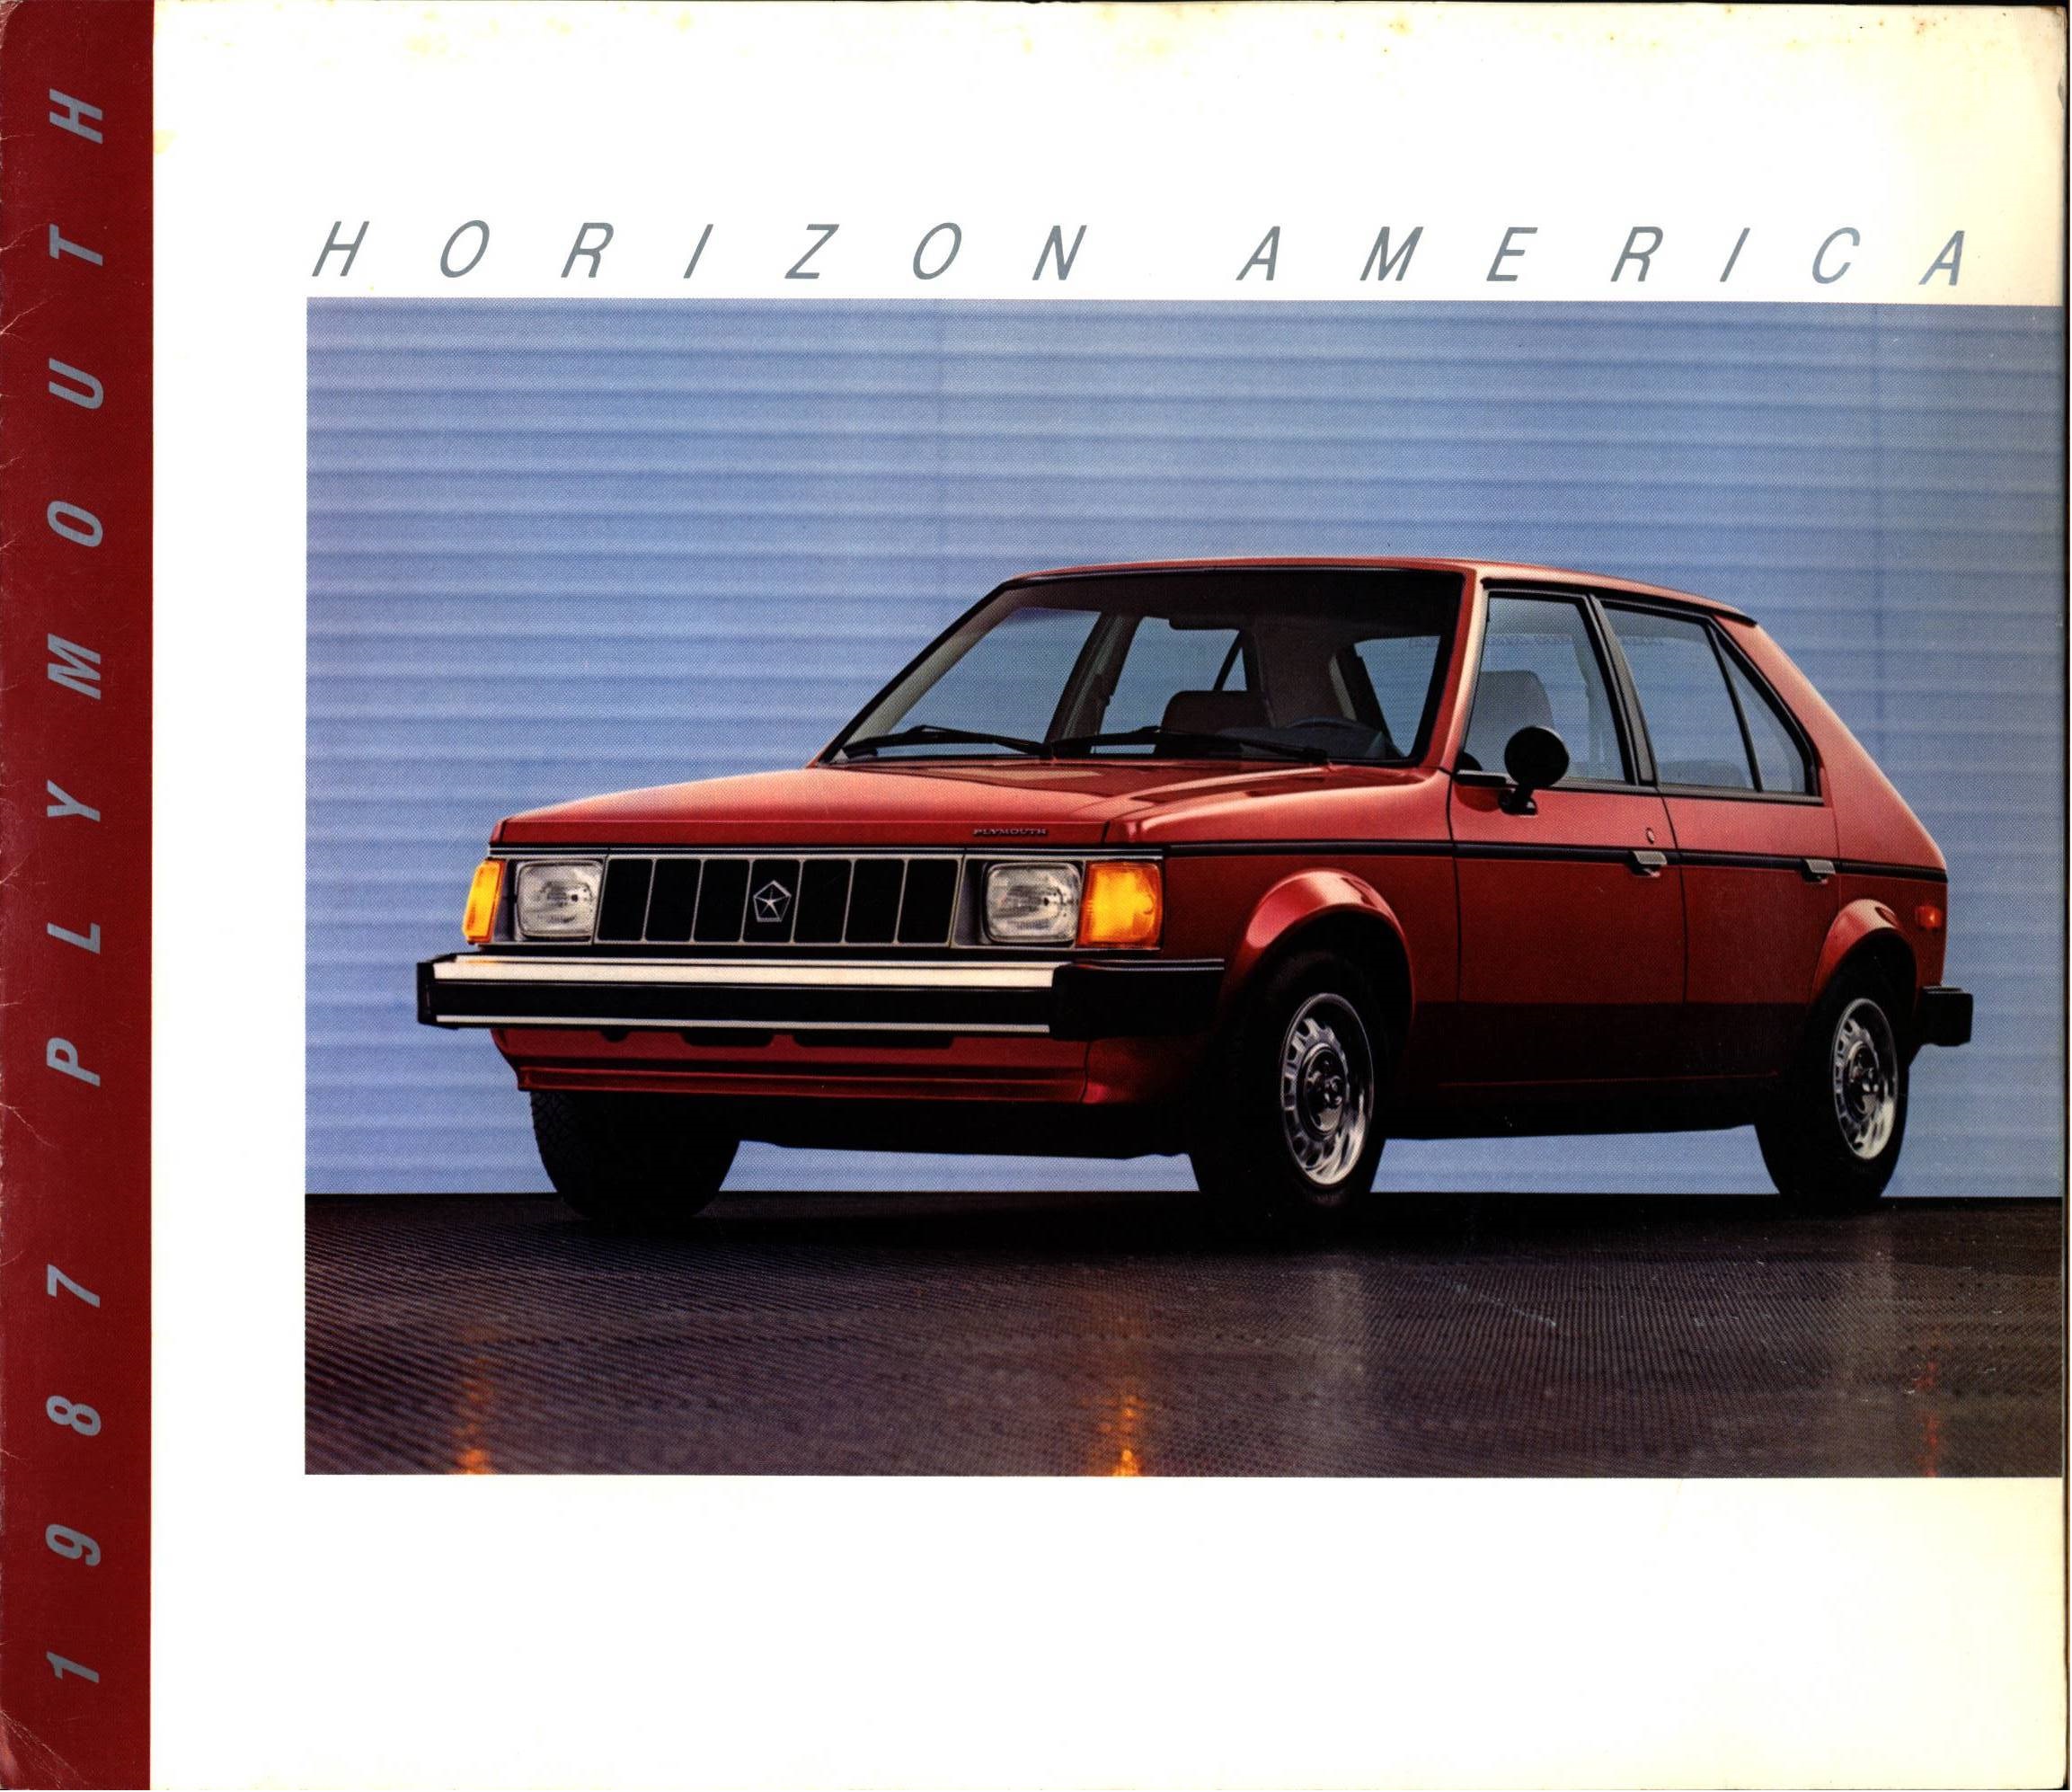 1987 Plymouth Horizon America Brochure 01